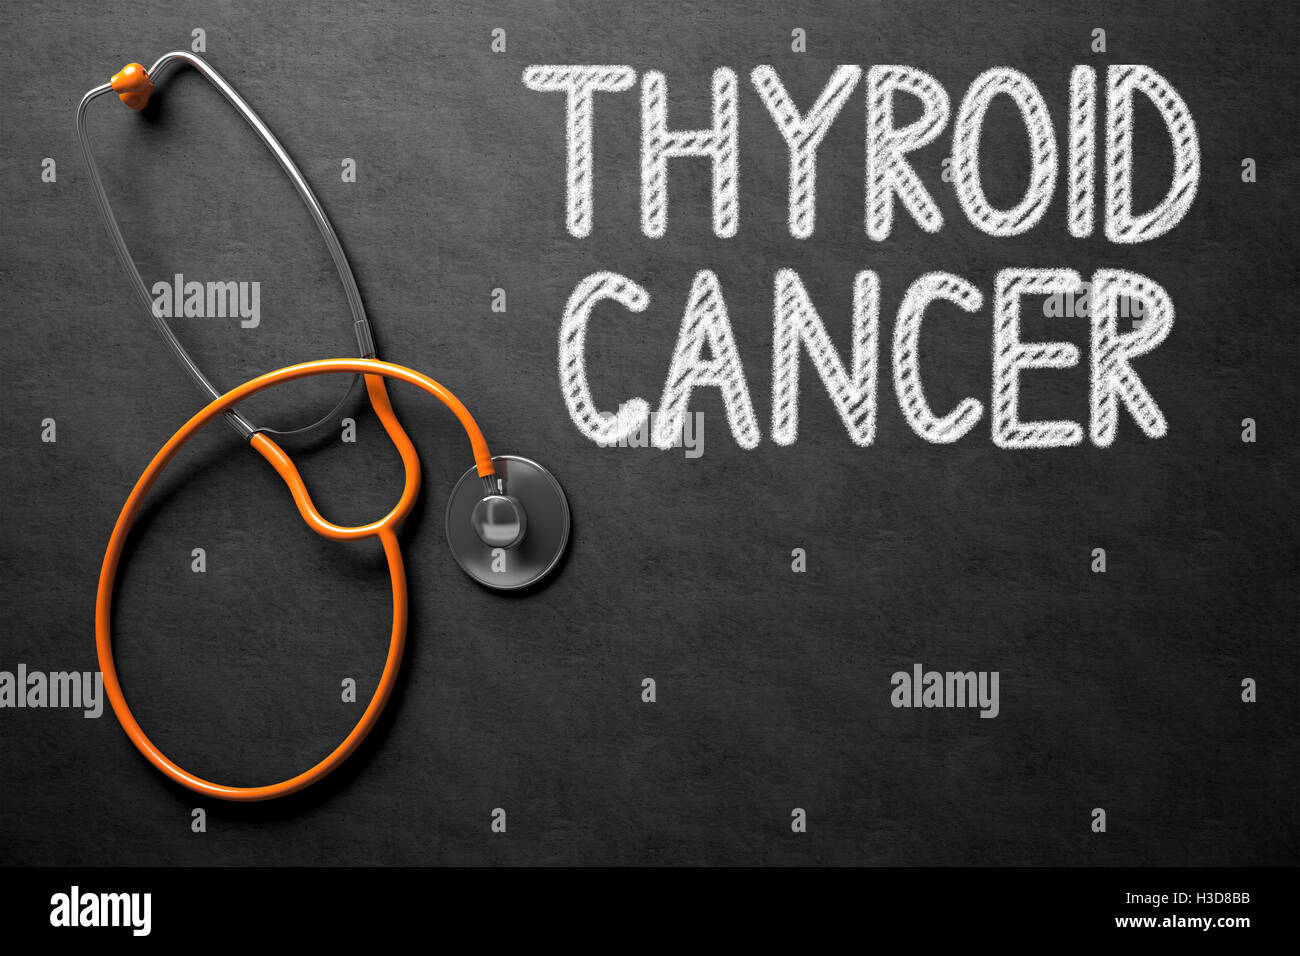 Thyroid Cancer - Text on Chalkboard. 3D Illustration. Stock Photo